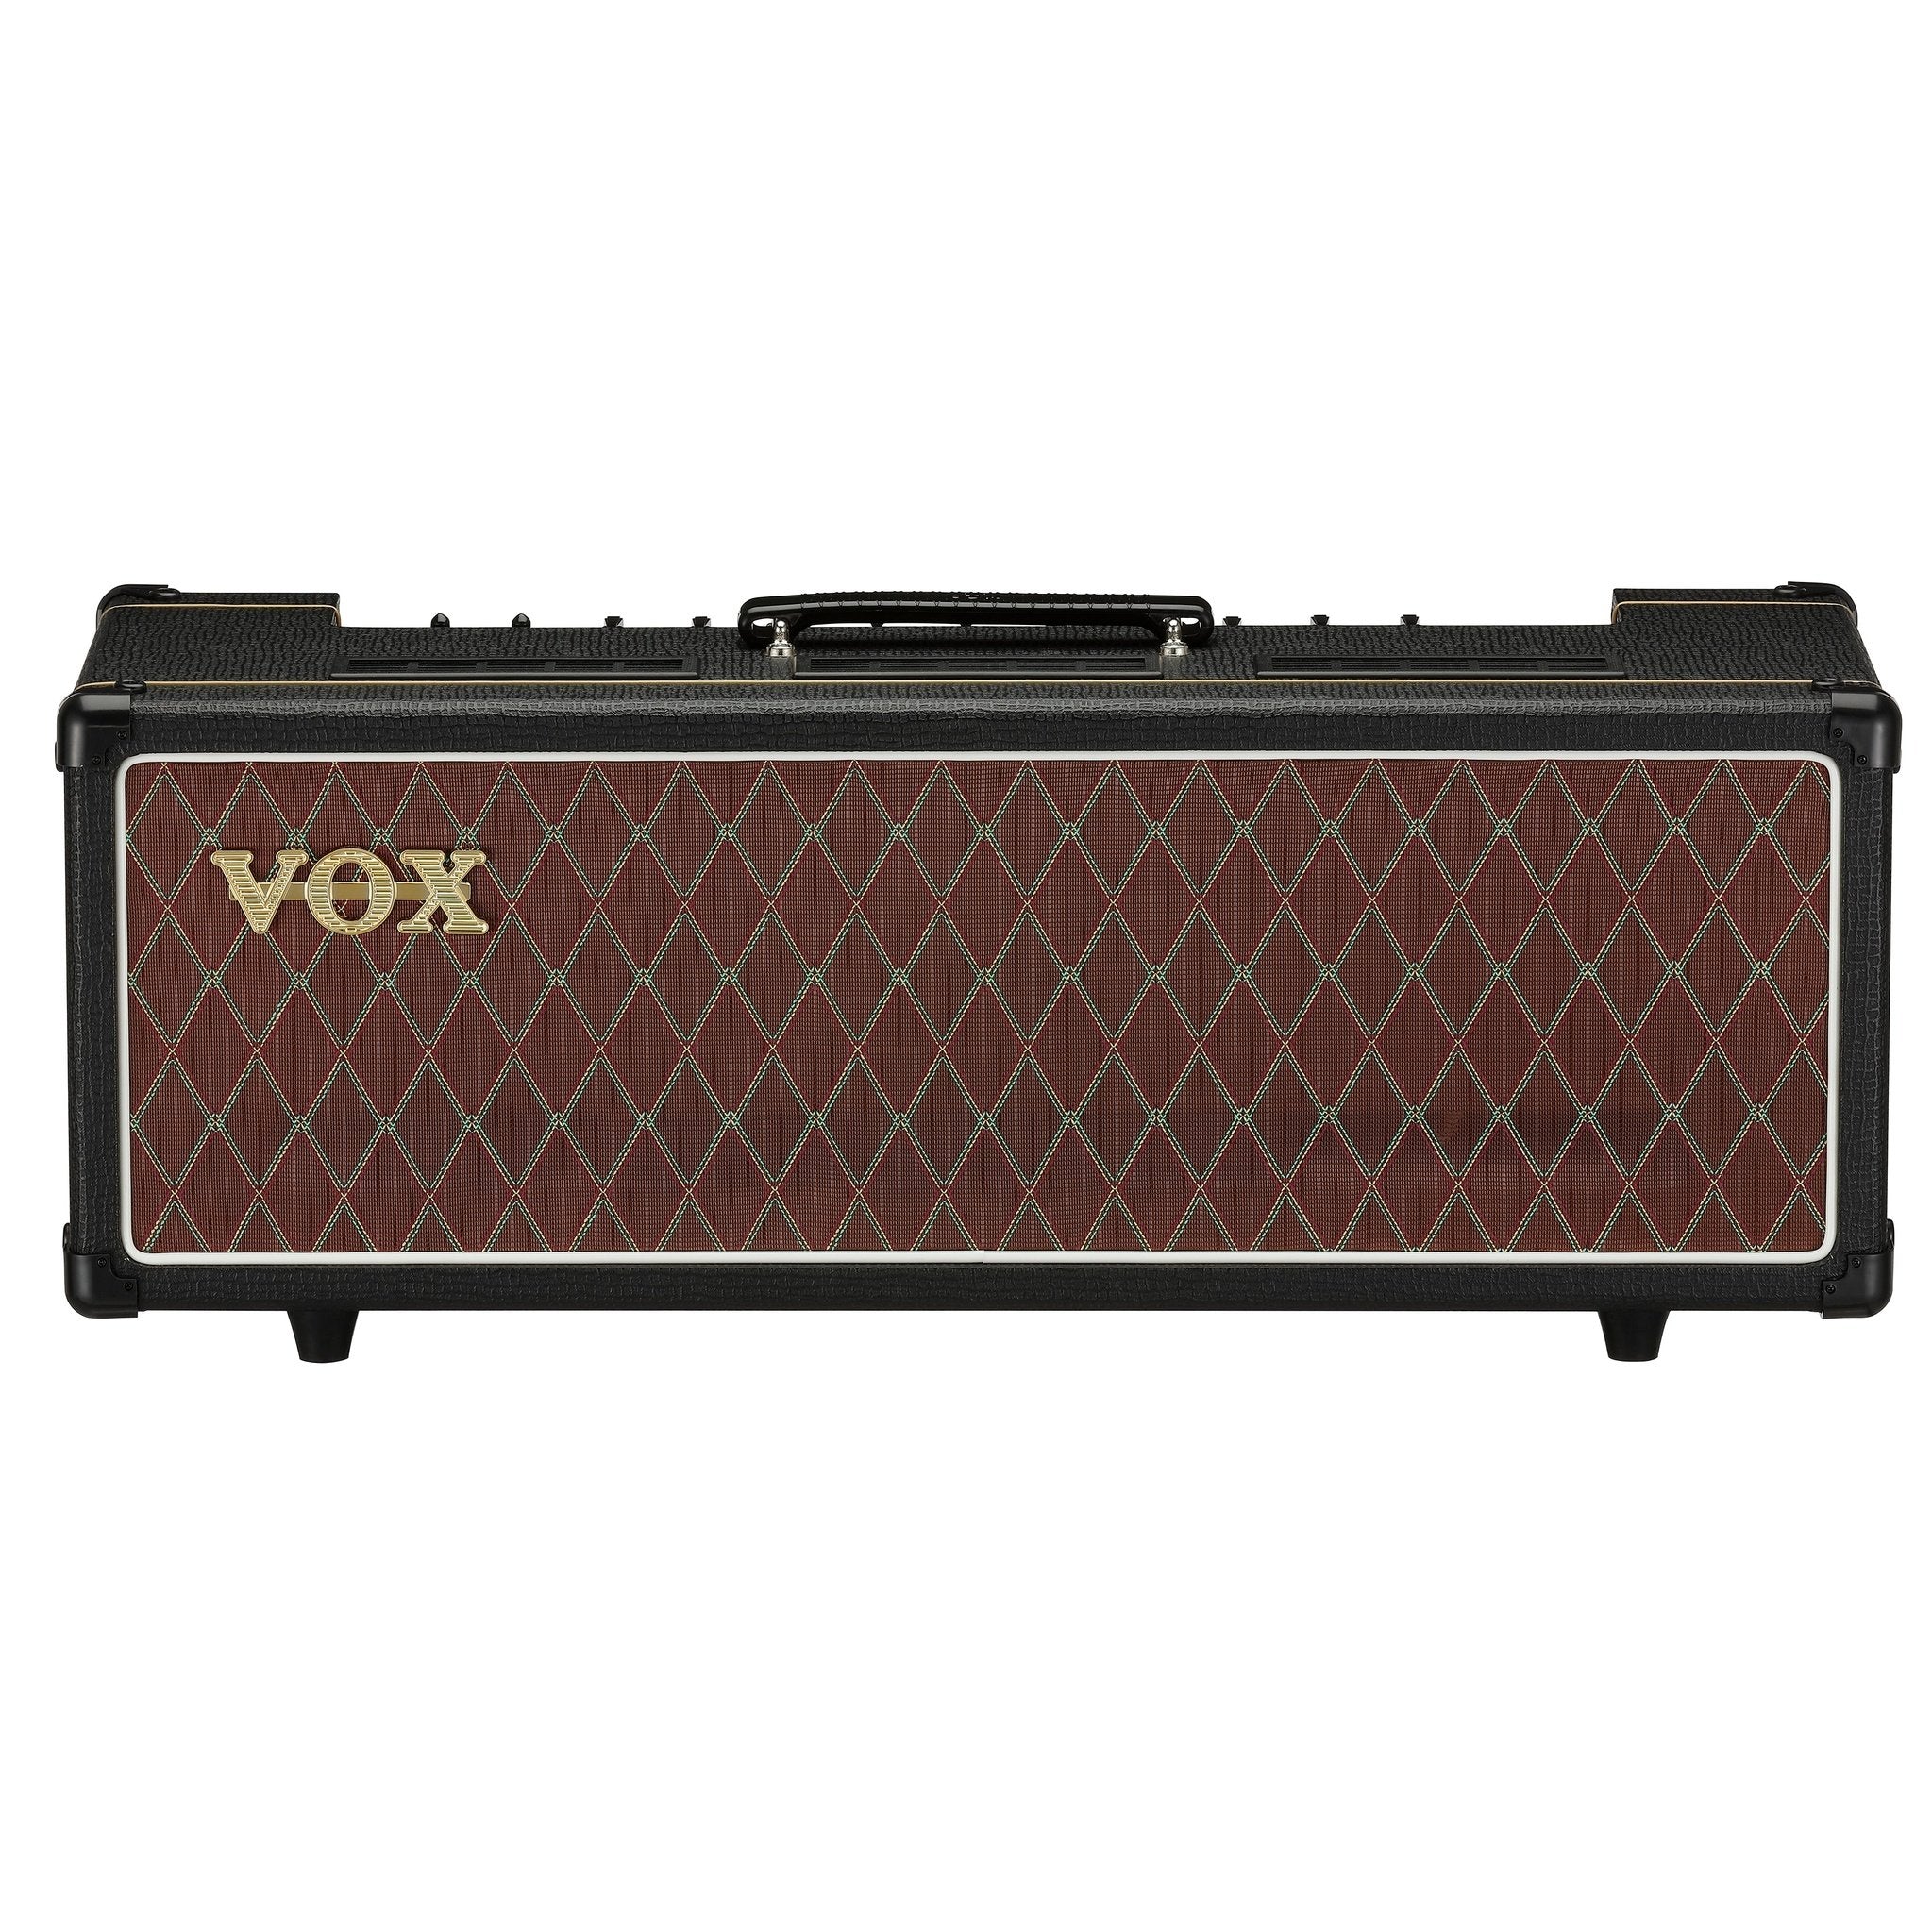 Vox AC30 Custom Head 1